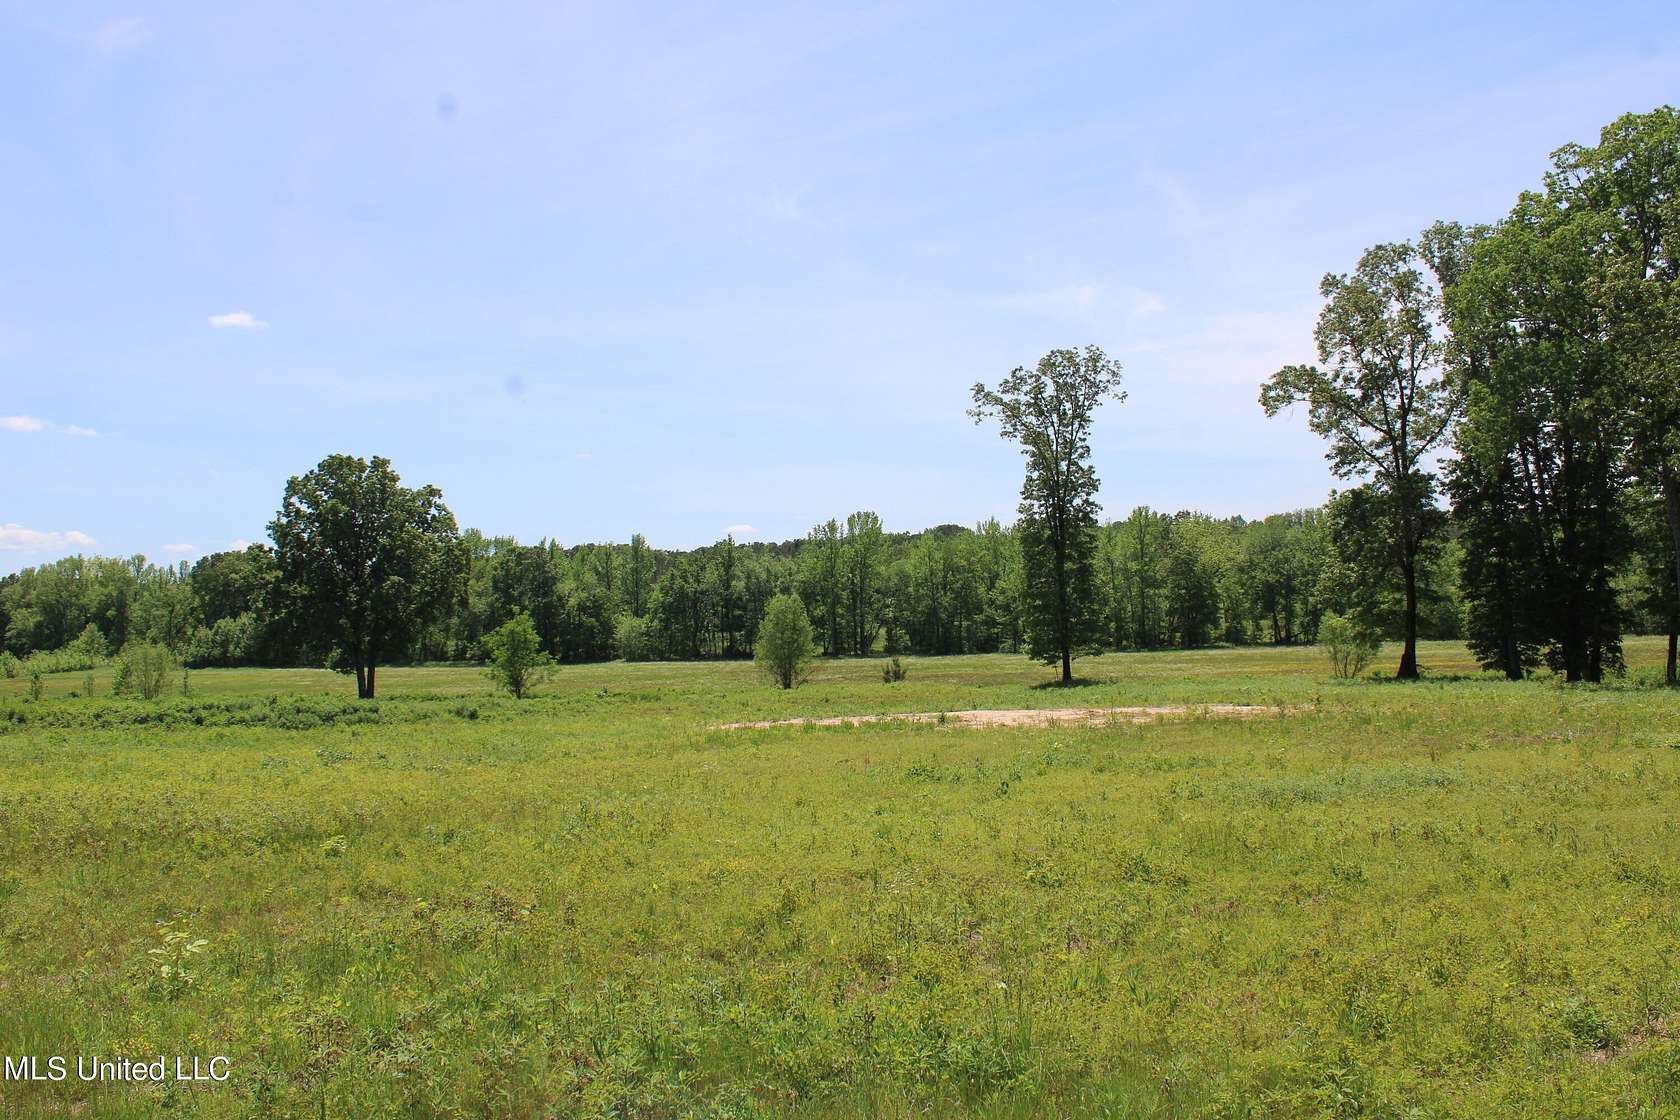 2 Acres of Residential Land for Sale in Byhalia, Mississippi